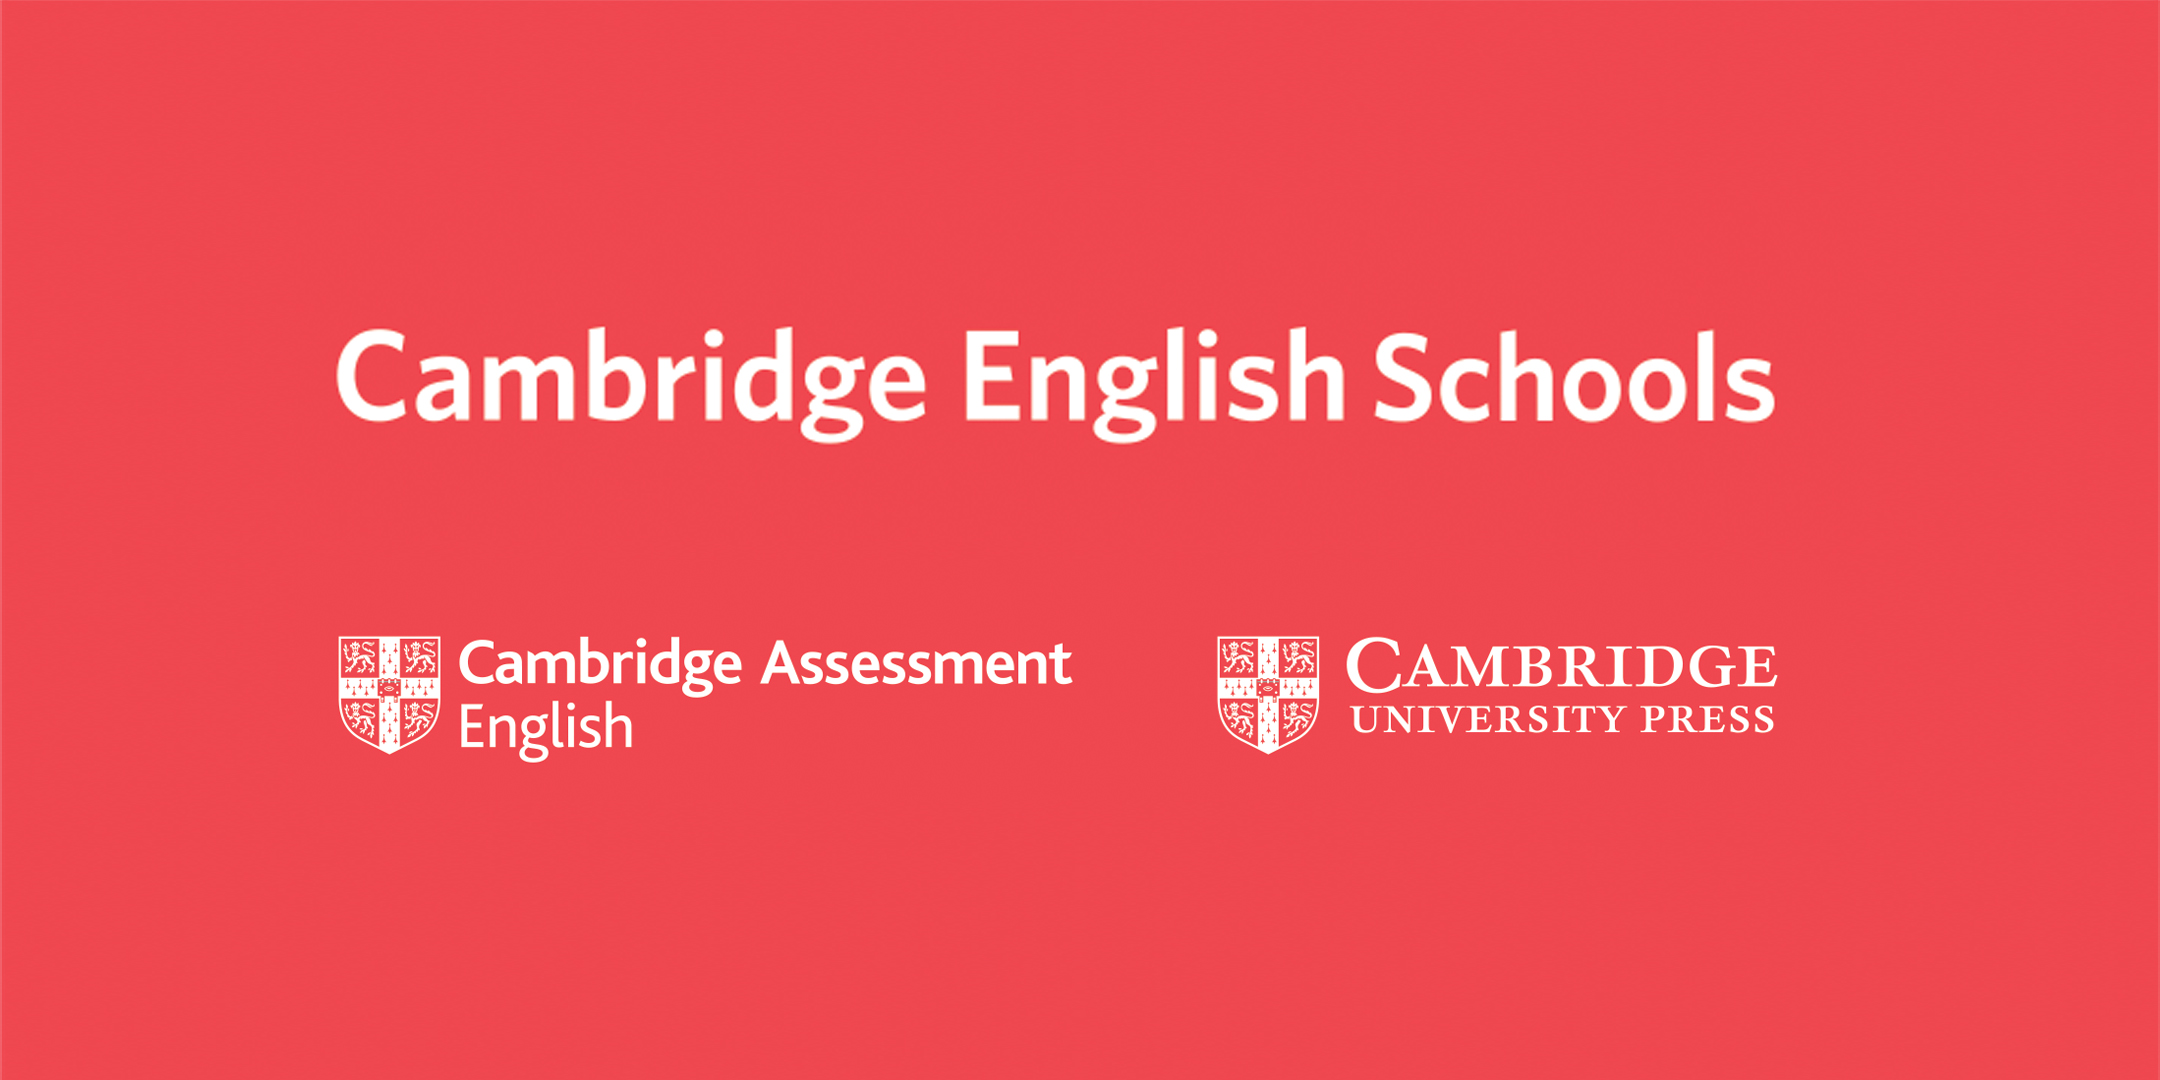 Cambridge English Schools - Latinamerica